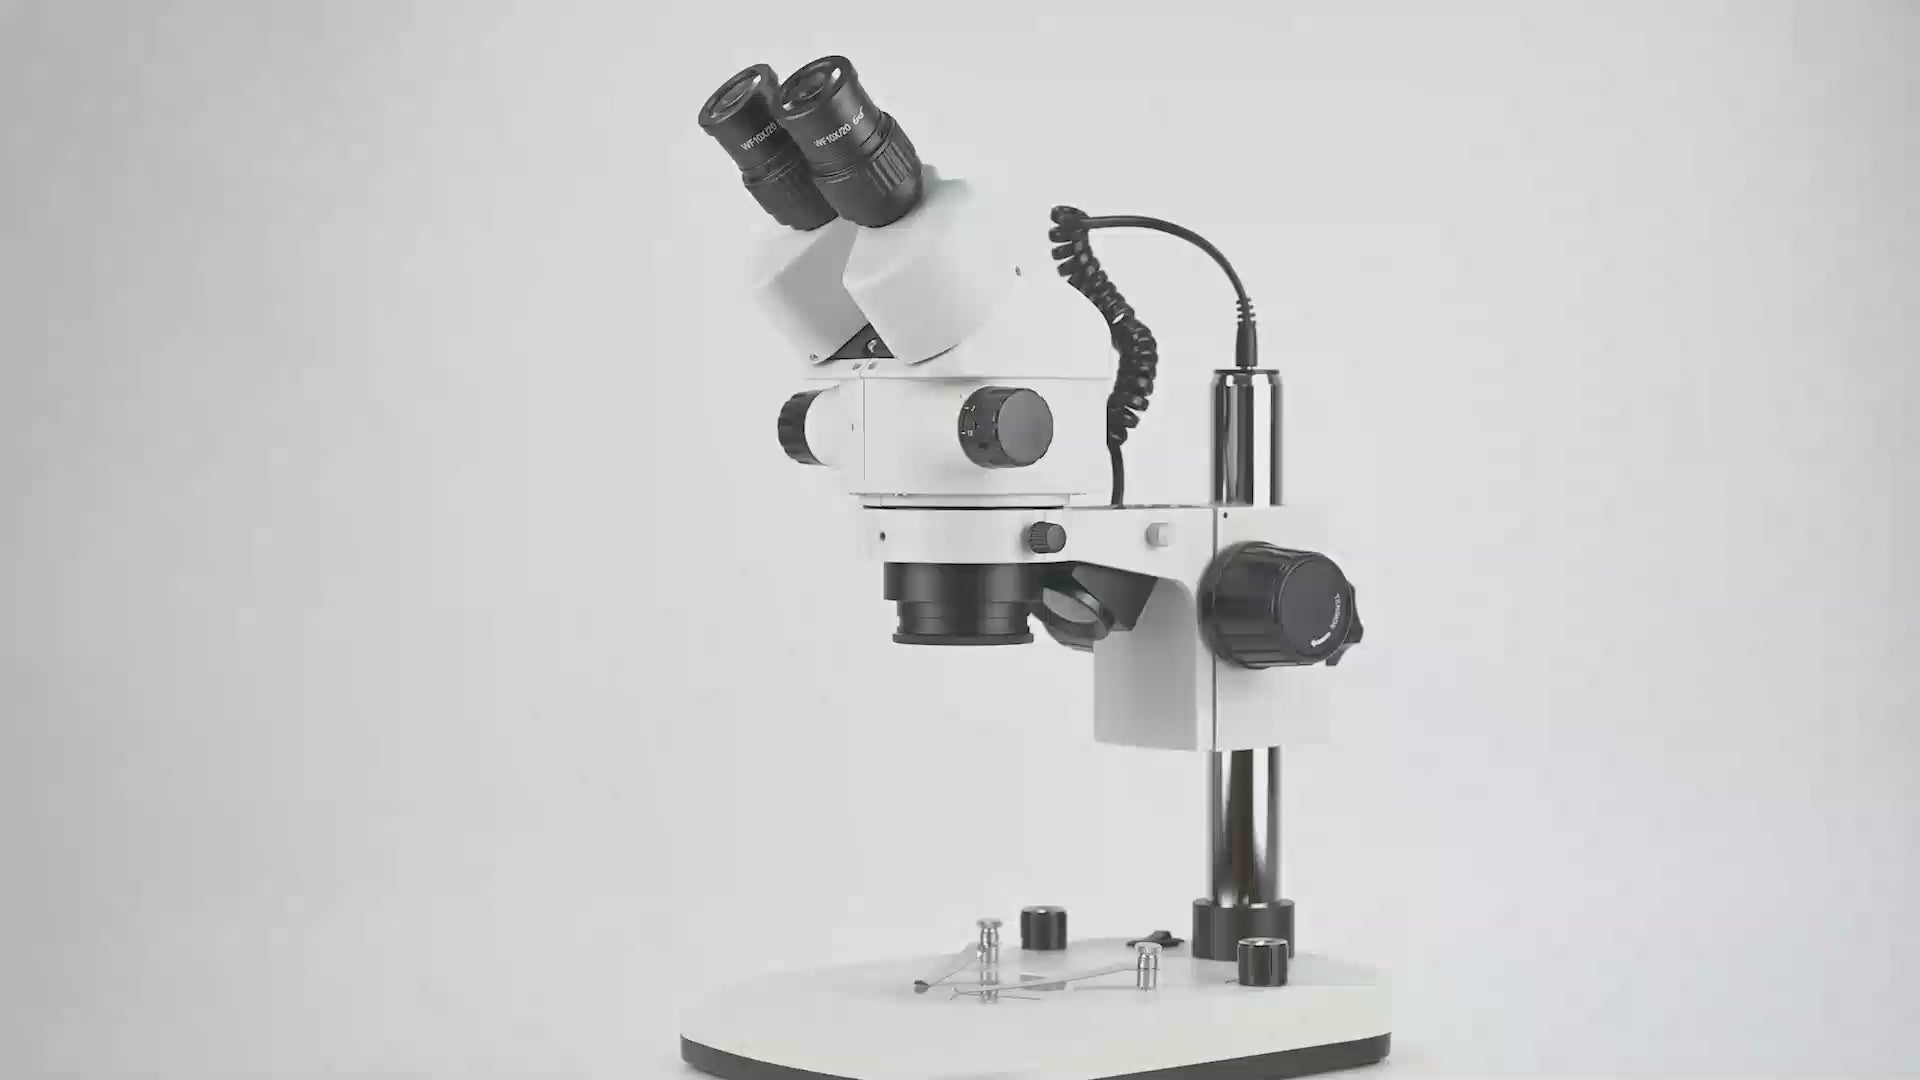 NZM0745B-D5L 0.7X-4.5X Zoom Binocular Stereo Microscope